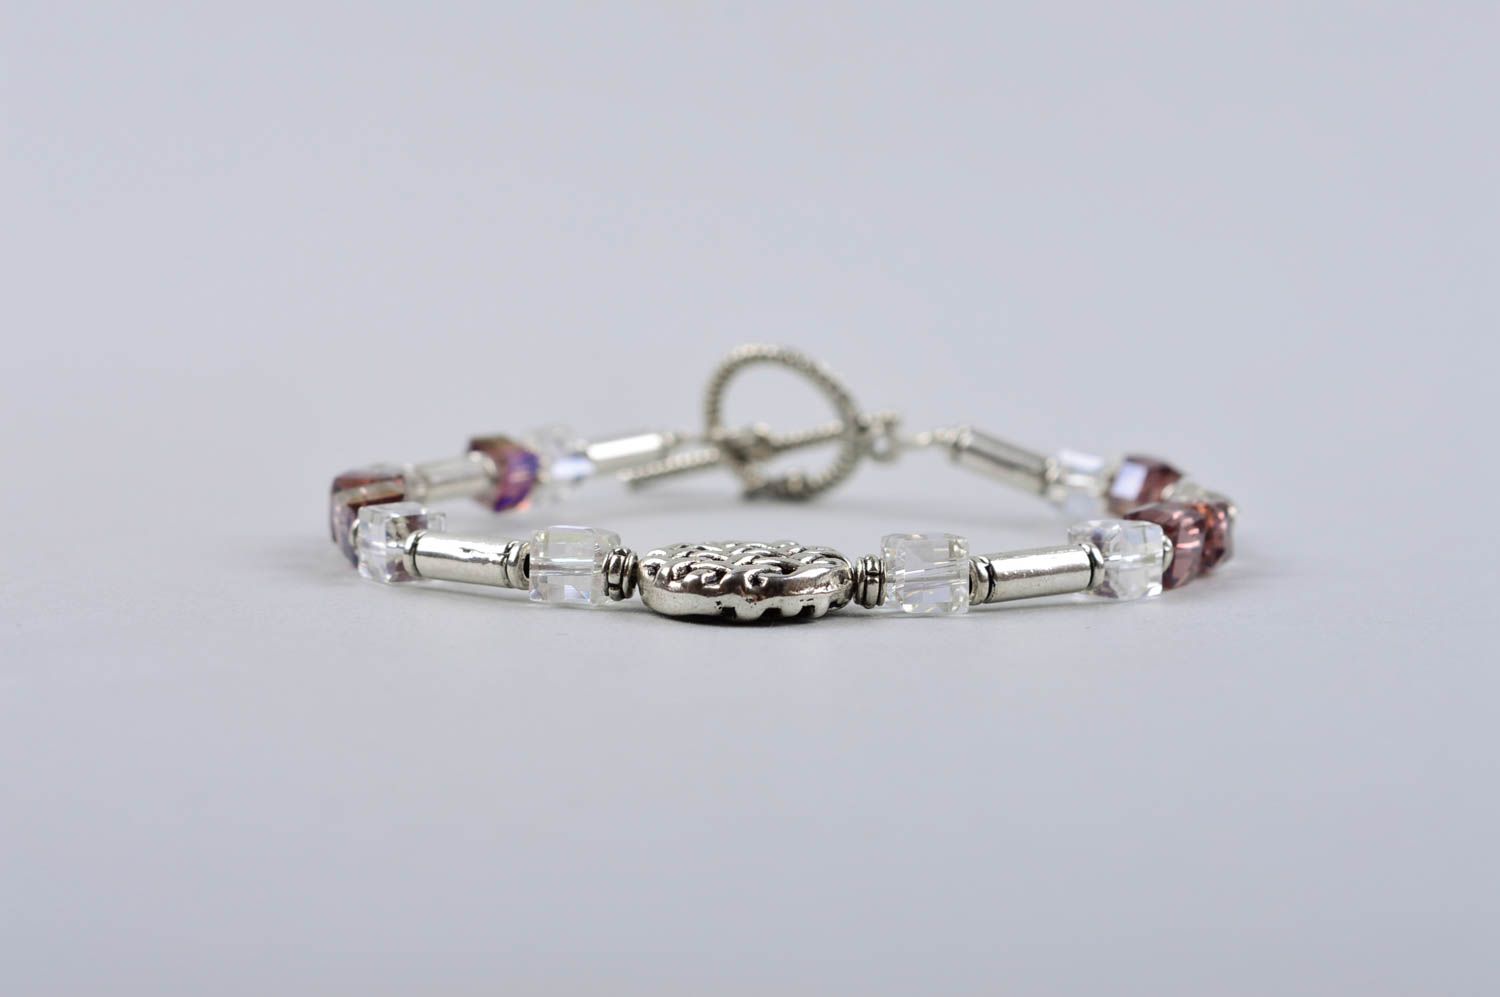 Fashion jewelry handmade designer bracelet beaded wrist accessory gift for women photo 4